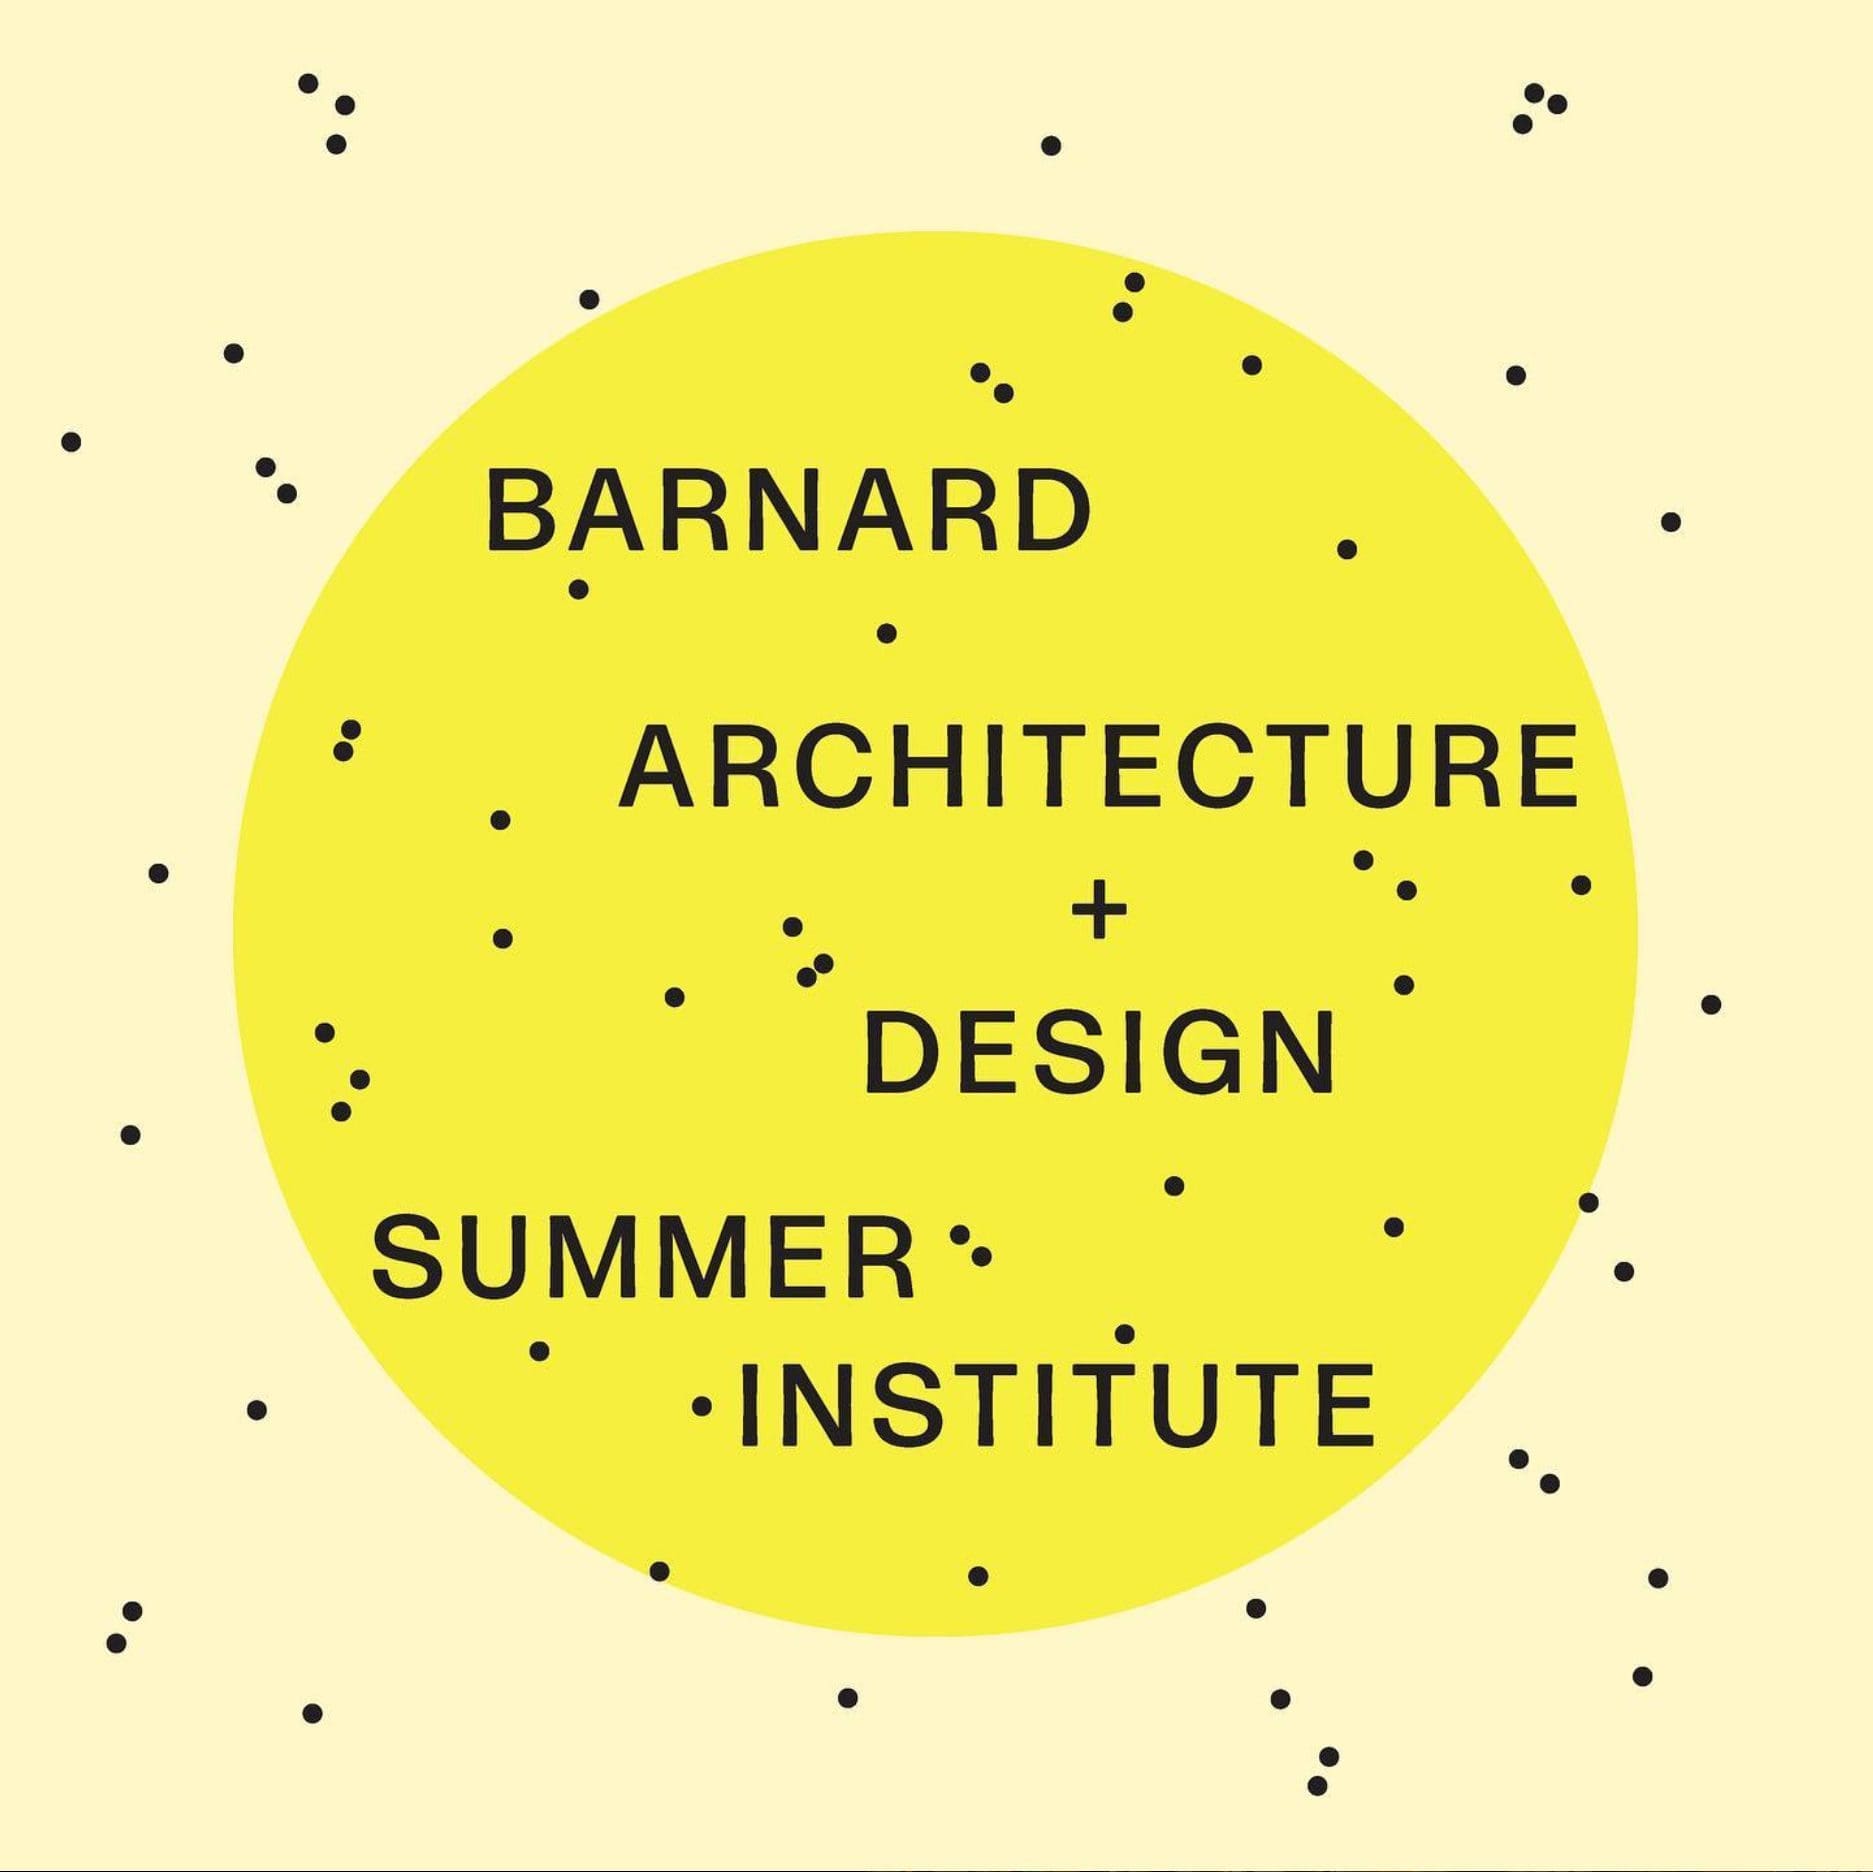 Barnard Architecture + Design Summer Institute